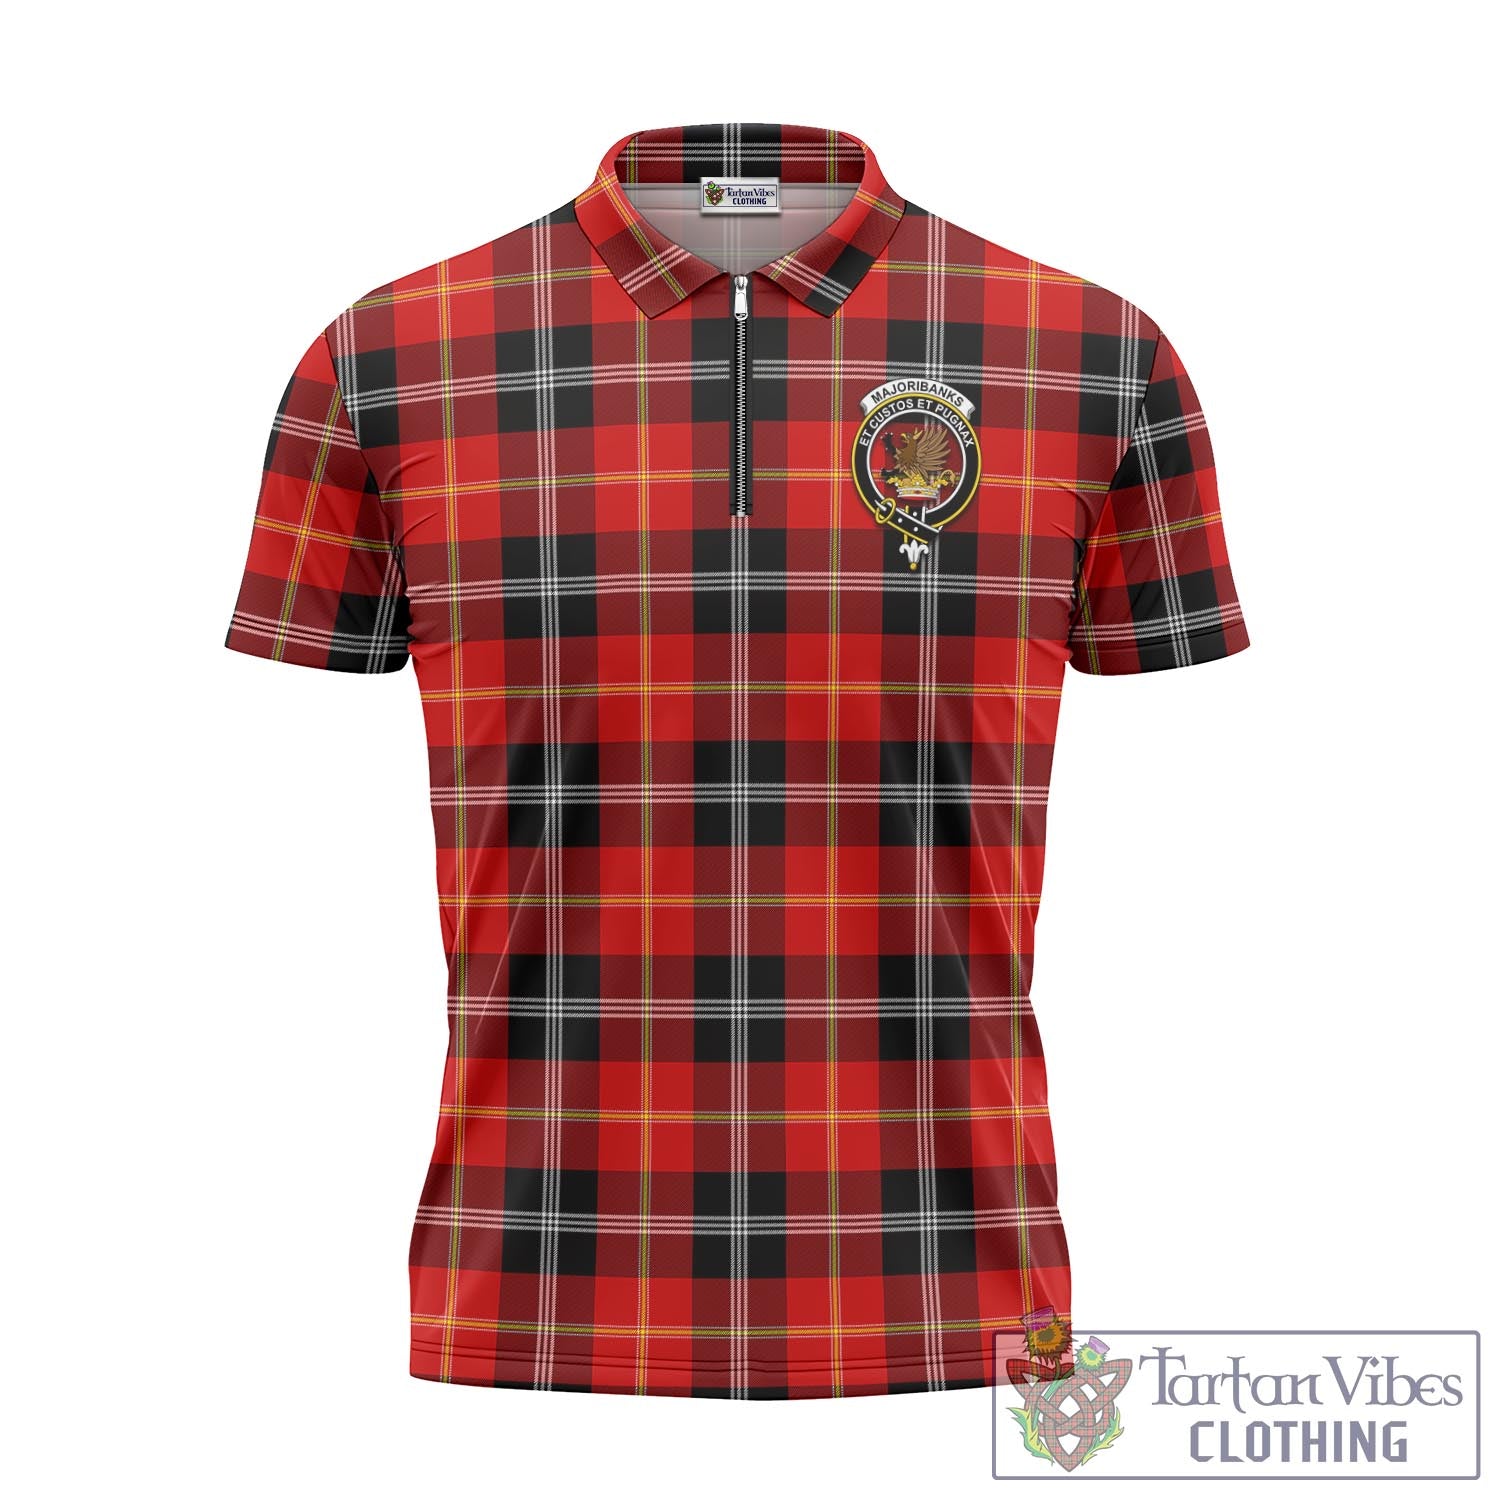 Tartan Vibes Clothing Majoribanks Tartan Zipper Polo Shirt with Family Crest